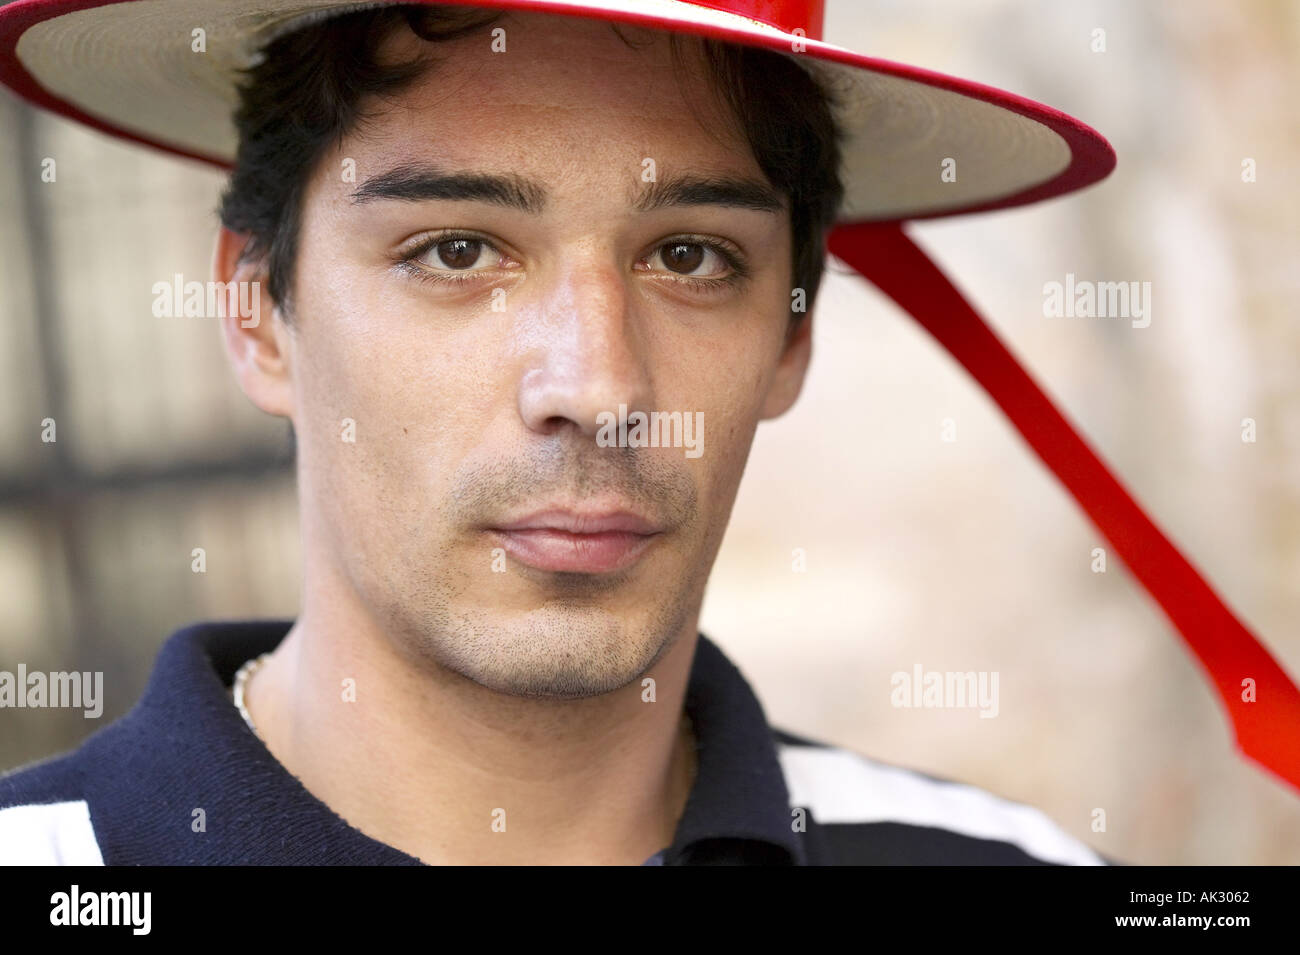 Serious man wearing hat avec garniture rouge uid 1433791 Banque D'Images